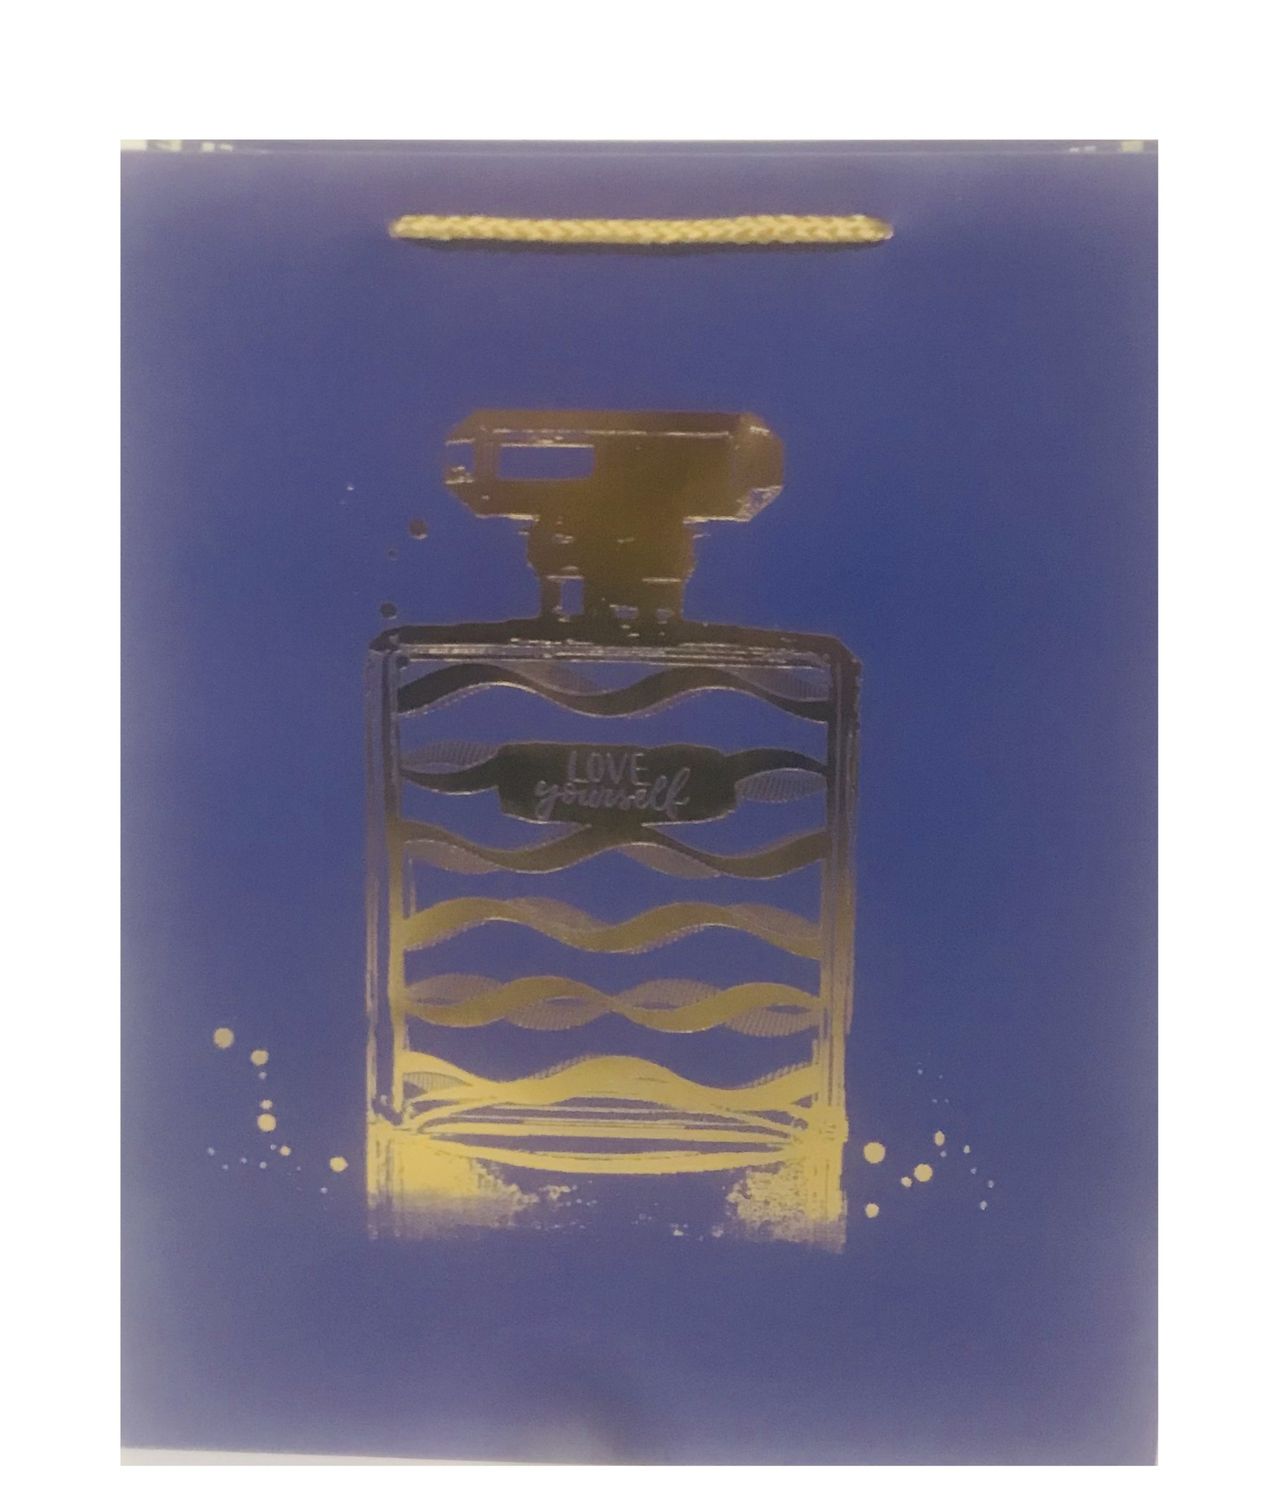 Perfume Bottle LOVE Yourself Medium Gift Bag PK3 (R15.50 Each)